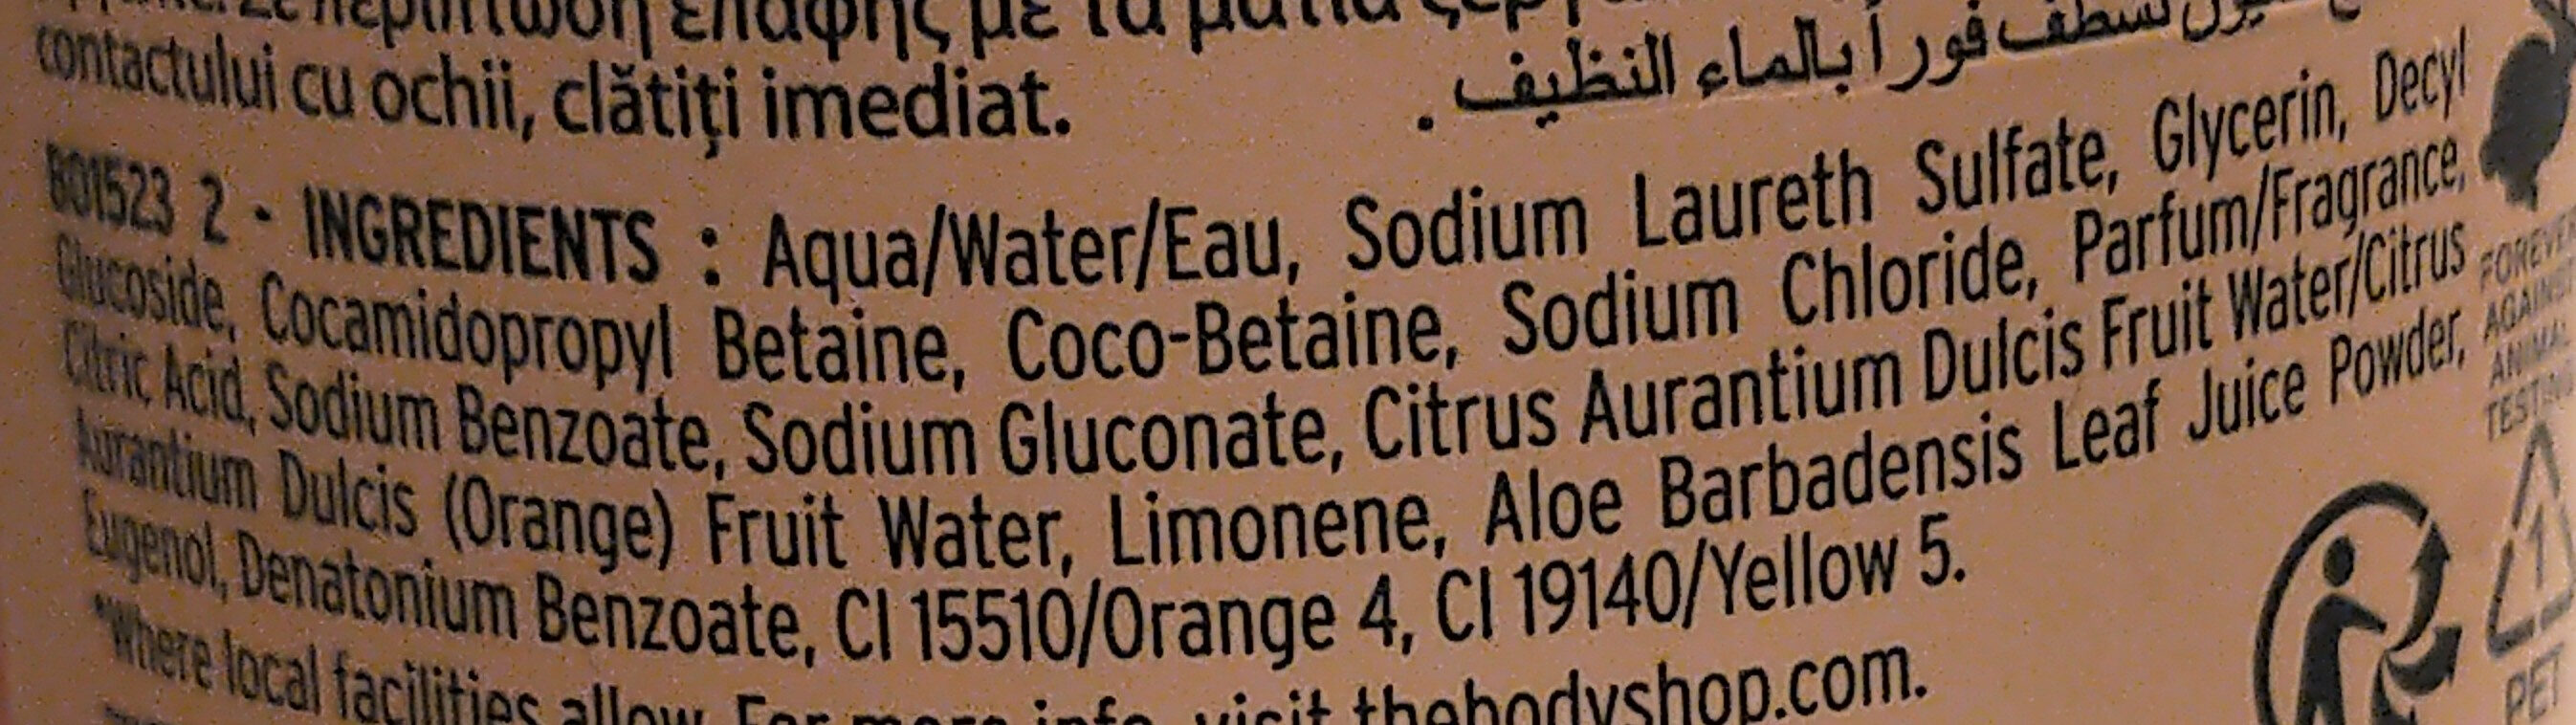 Spiced Orange Shower Gel - Ingredientes - en